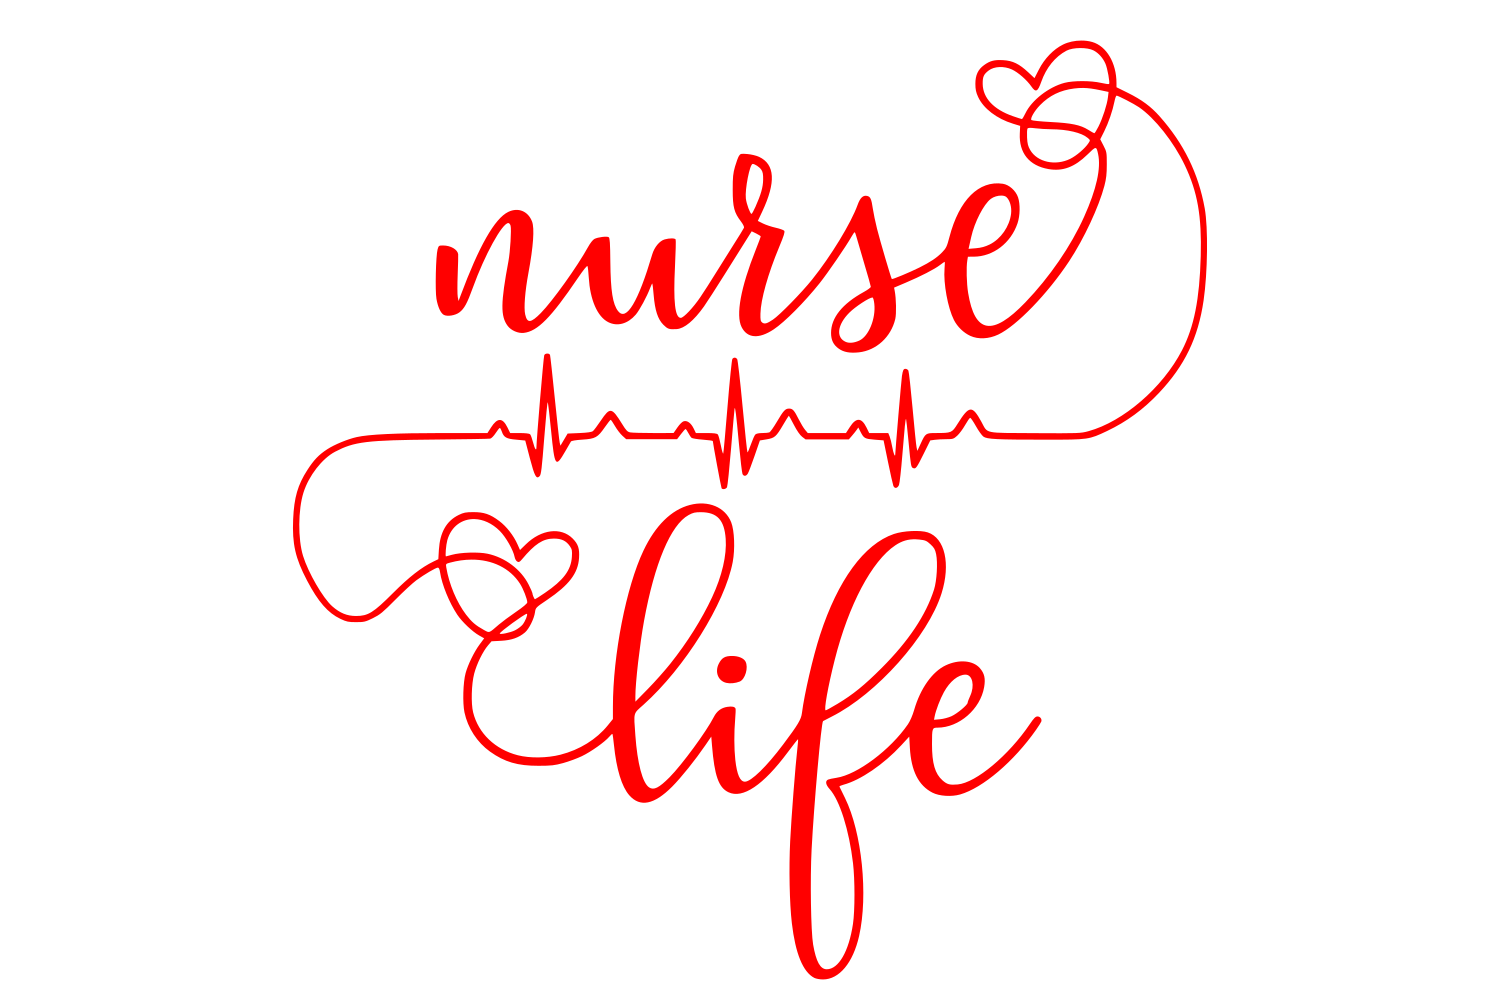 Nurse Life svg